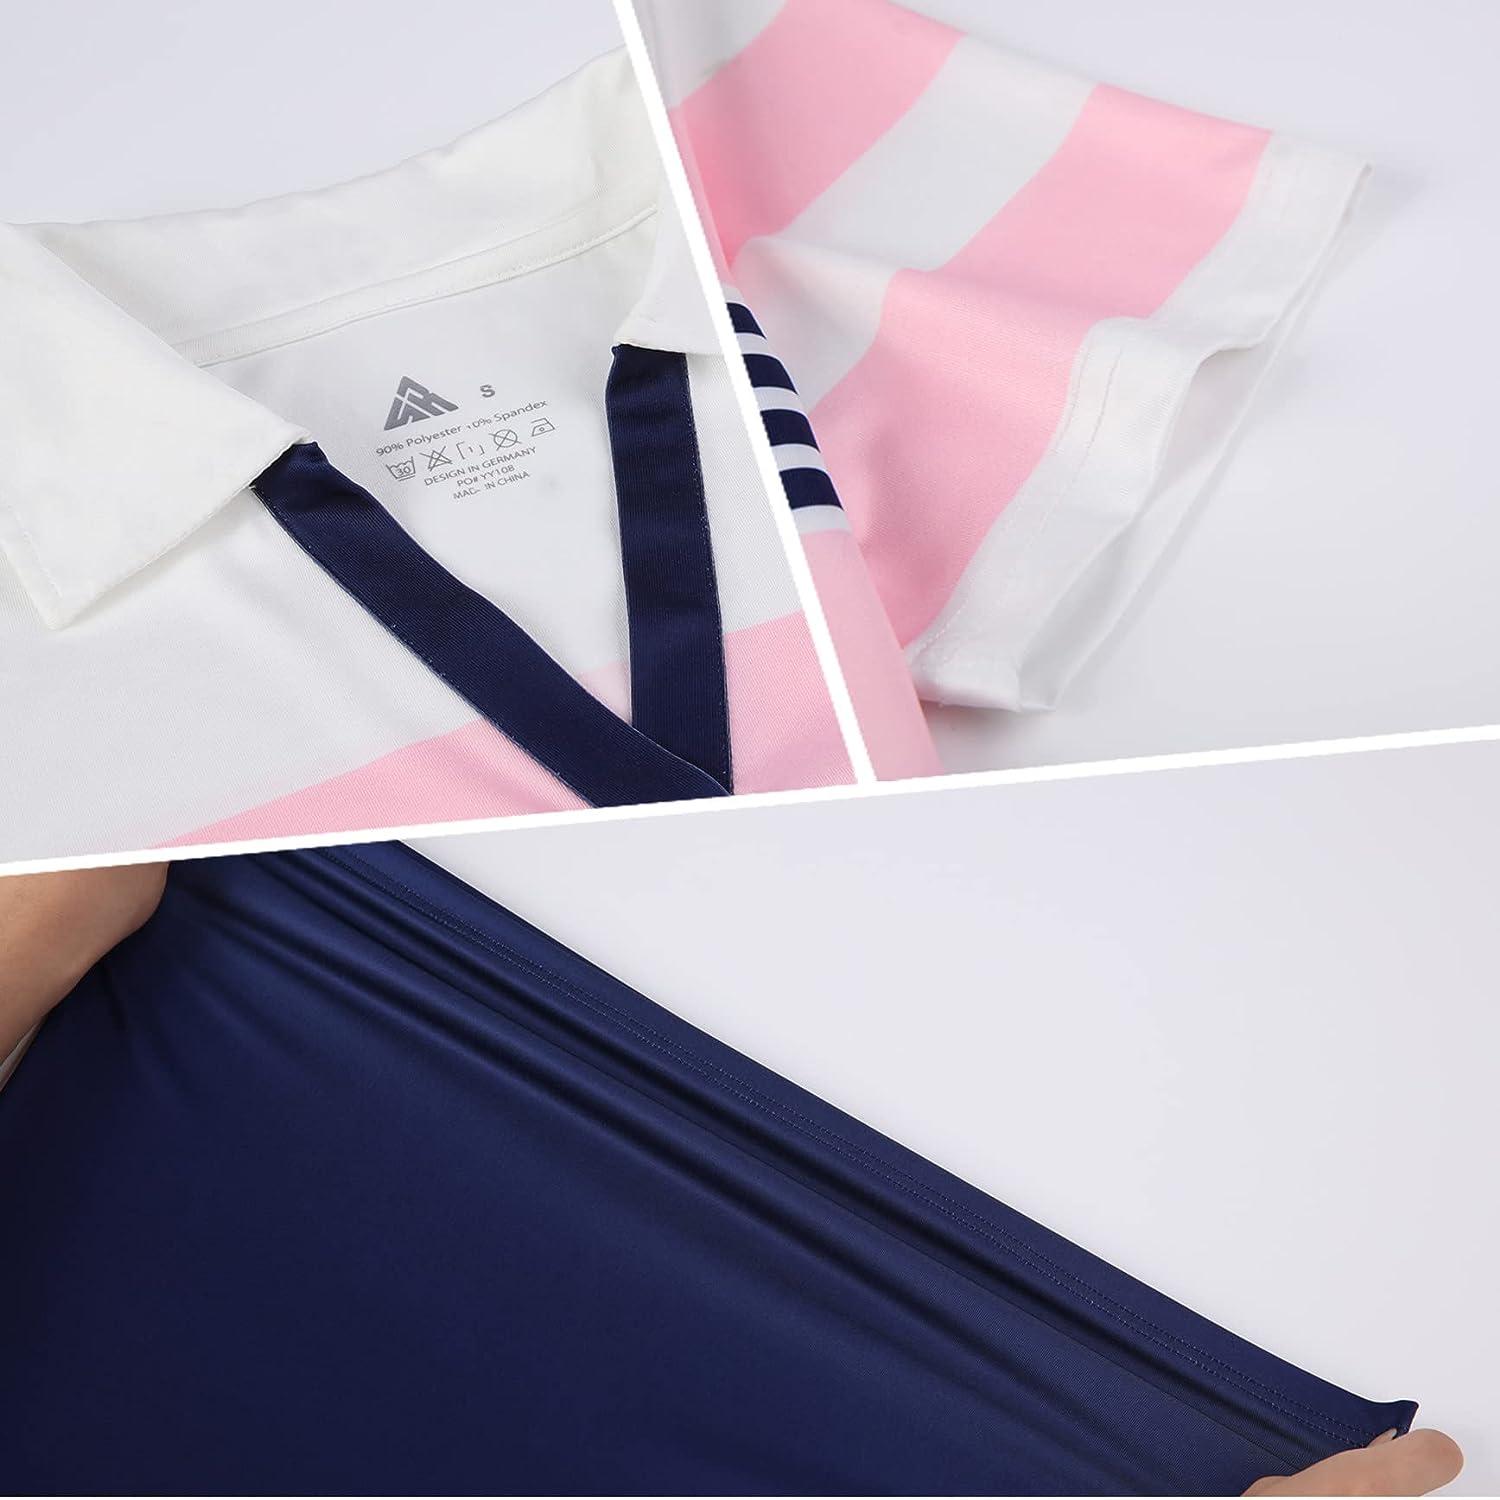 IGEEKWELL Women's Golf Shirts Short Sleeve Collared Polo Shirt Moisture  Wicking Lady Golf Apparel Print Tennis Sport T Shirt 035-navy Pink X-Large